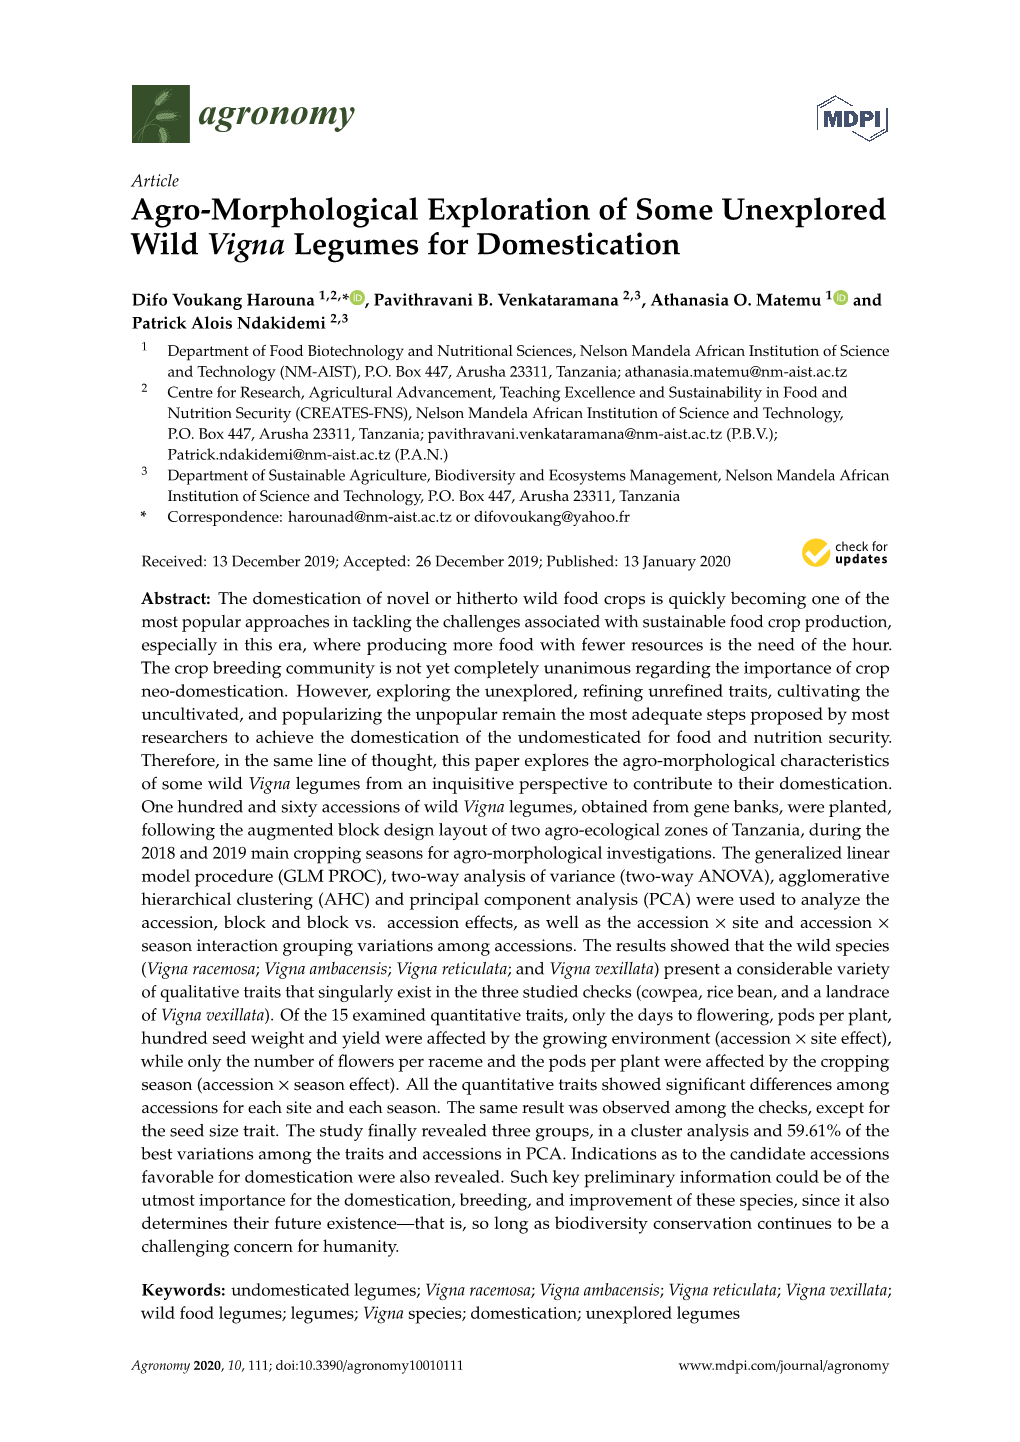 Agro-Morphological Exploration of Some Unexplored Wild Vigna Legumes for Domestication